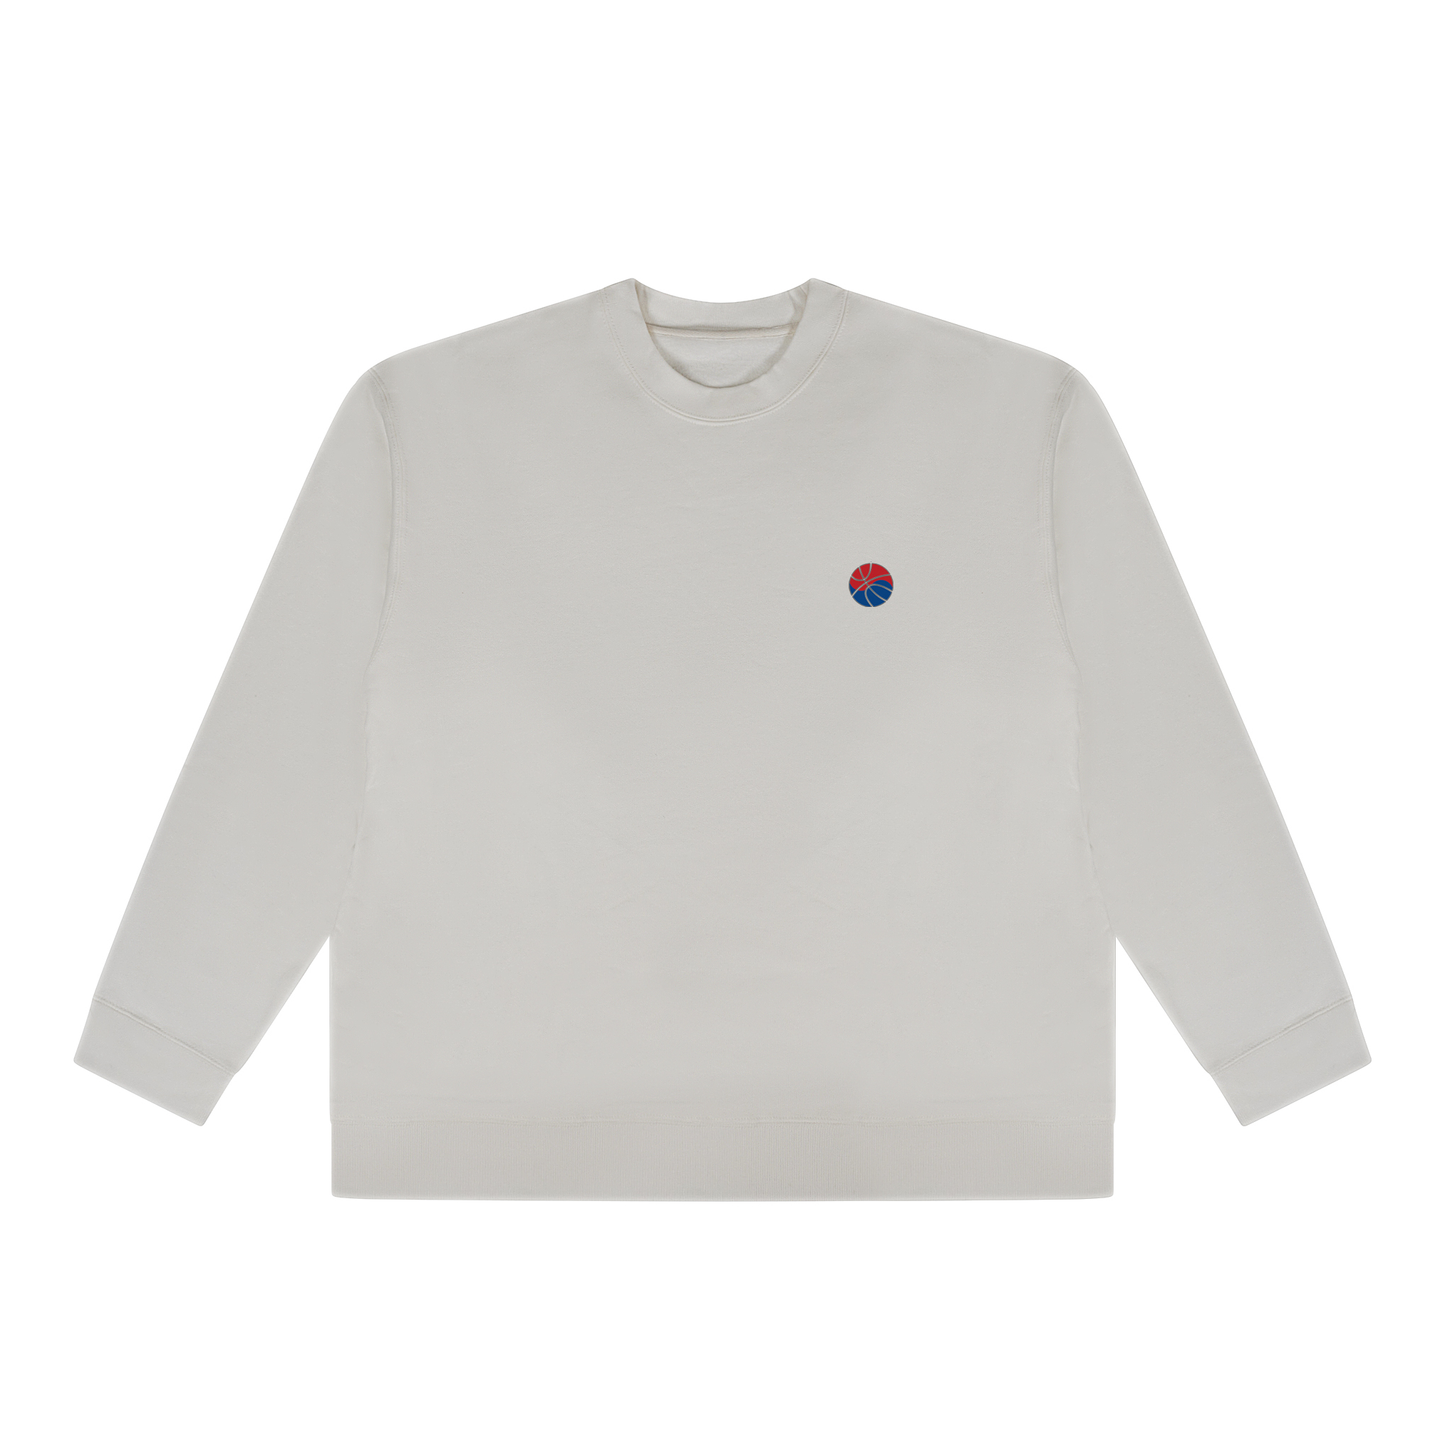 Air Korean 2.0 - Crewneck Sweater